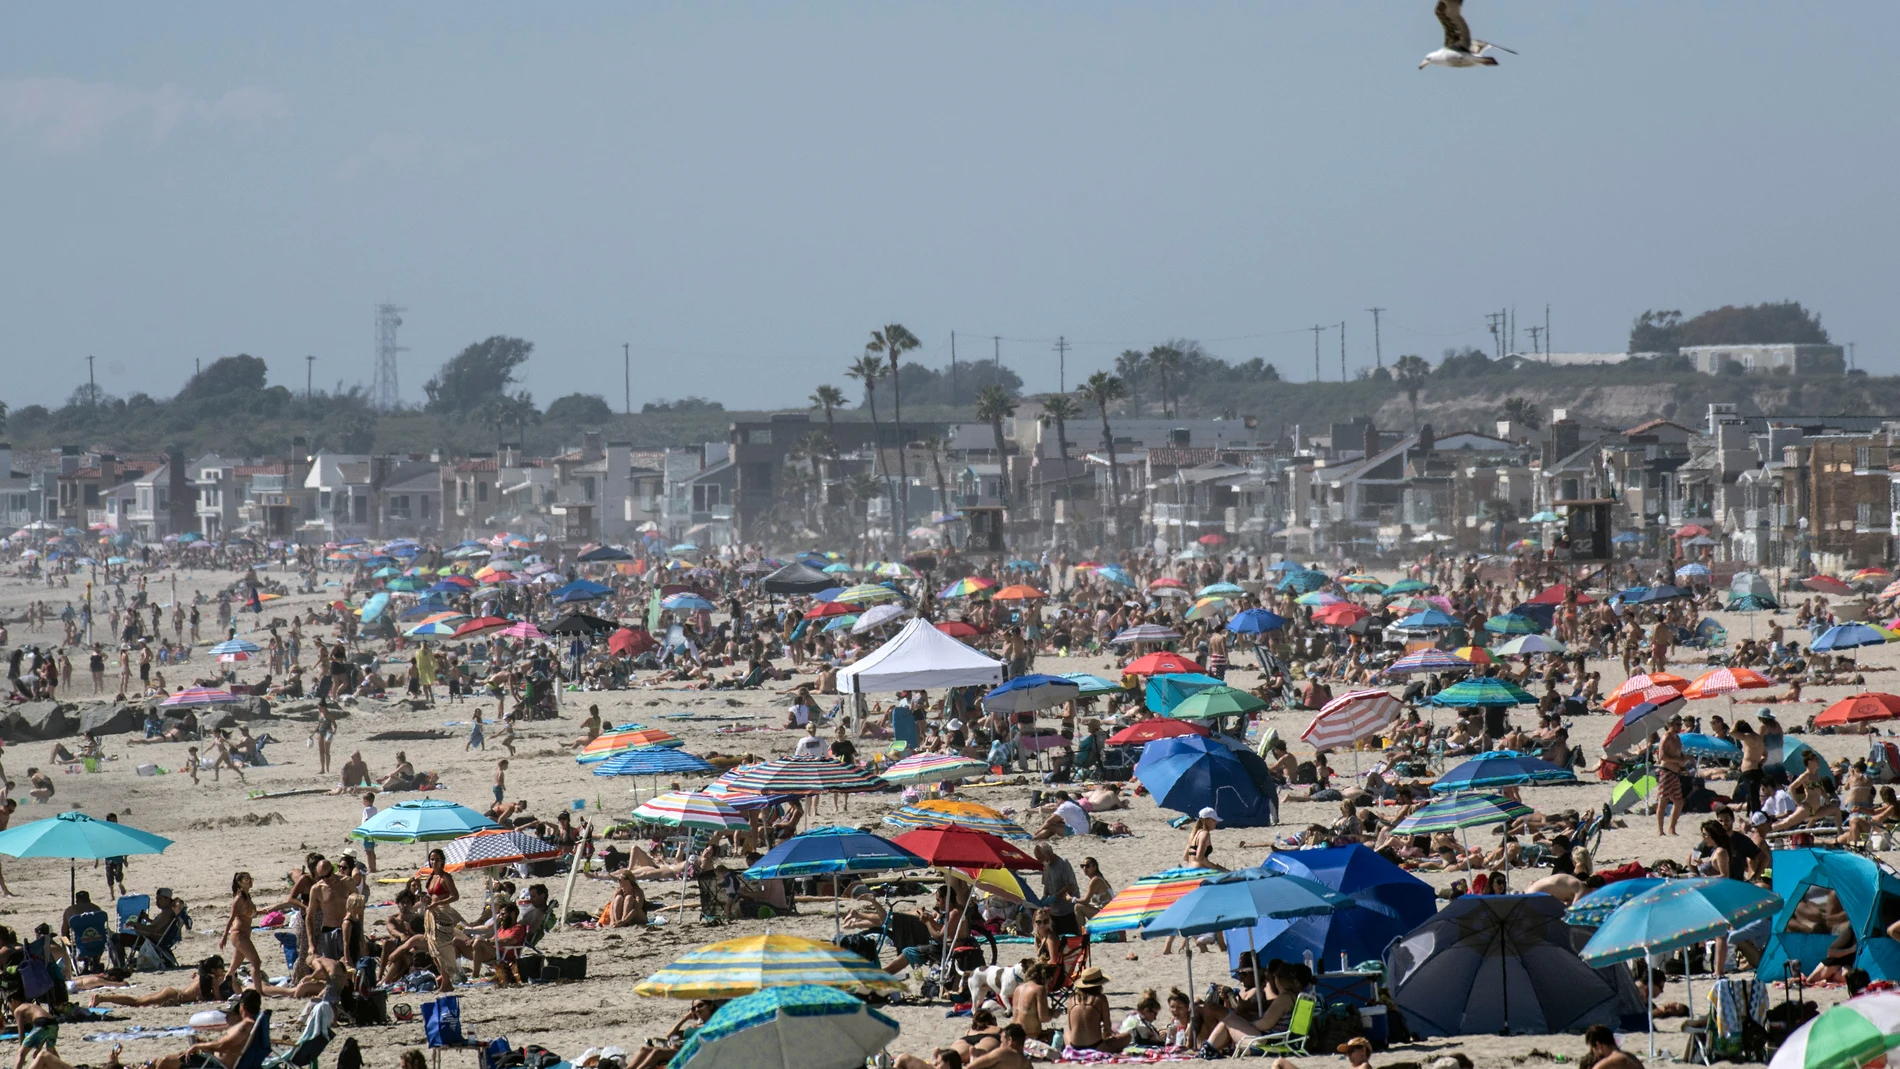 Heat waves hits California